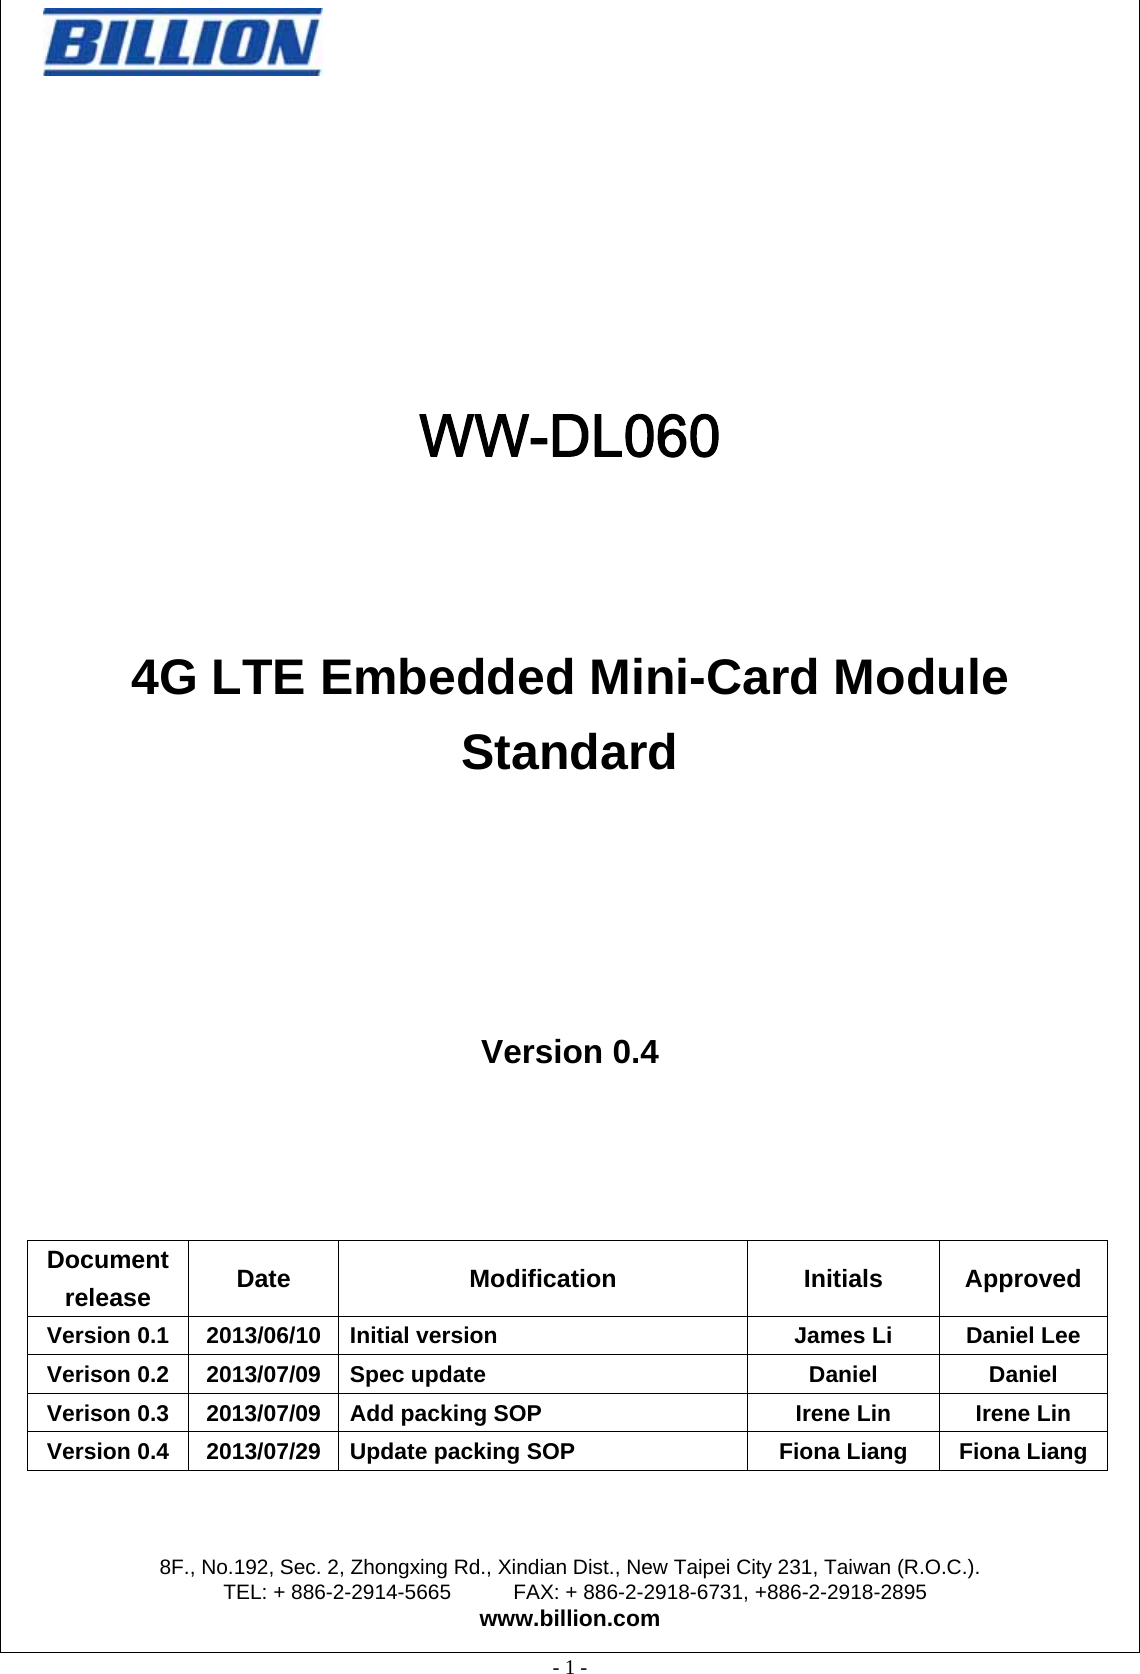                                                  8F., No.192, Sec. 2, Zhongxing Rd., Xindian Dist., New Taipei City 231, Taiwan (R.O.C.). TEL: + 886-2-2914-5665      FAX: + 886-2-2918-6731, +886-2-2918-2895 www.billion.com  - 1 -     WW-DL060   4G LTE Embedded Mini-Card Module Standard     Version 0.4  Document release  Date Modification  Initials Approved Version 0.1  2013/06/10 Initial version  James Li  Daniel Lee Verison 0.2  2013/07/09 Spec update    Daniel  Daniel Verison 0.3  2013/07/09 Add packing SOP  Irene Lin  Irene Lin Version 0.4  2013/07/29 Update packing SOP  Fiona Liang  Fiona Liang 